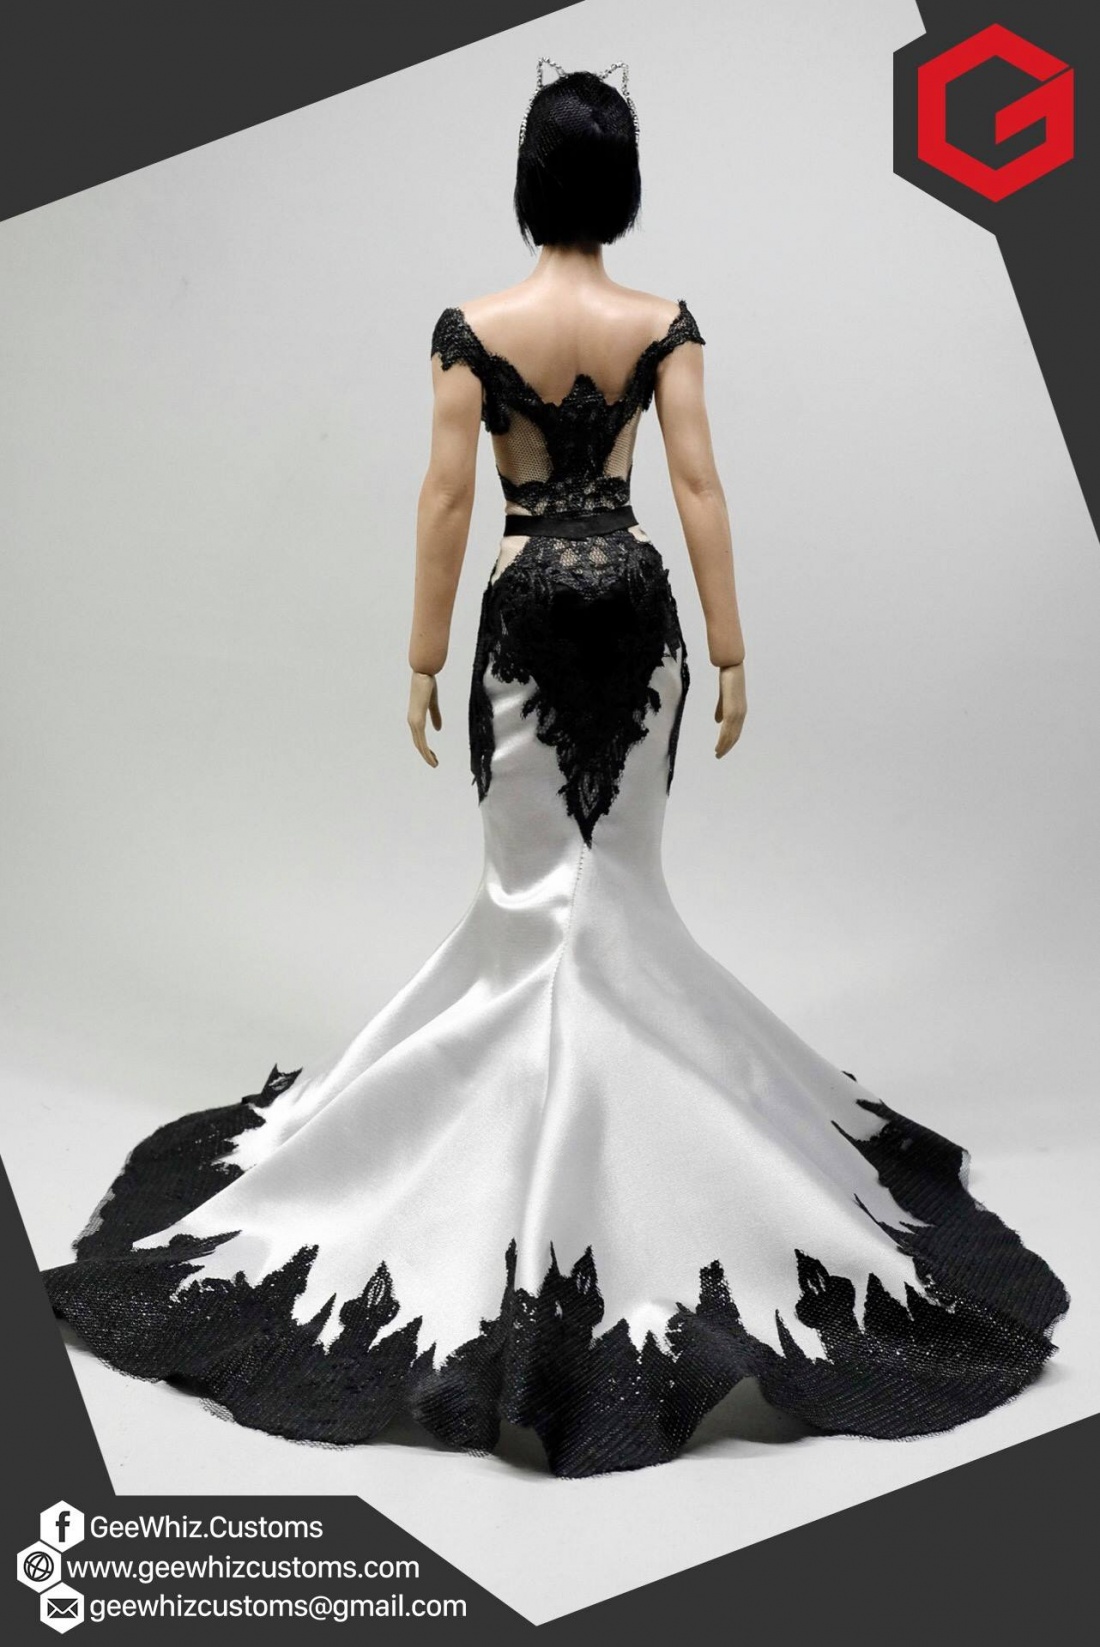 Dazzling Korean Compound Geewhiz Customs: Catwoman's Wedding Gown